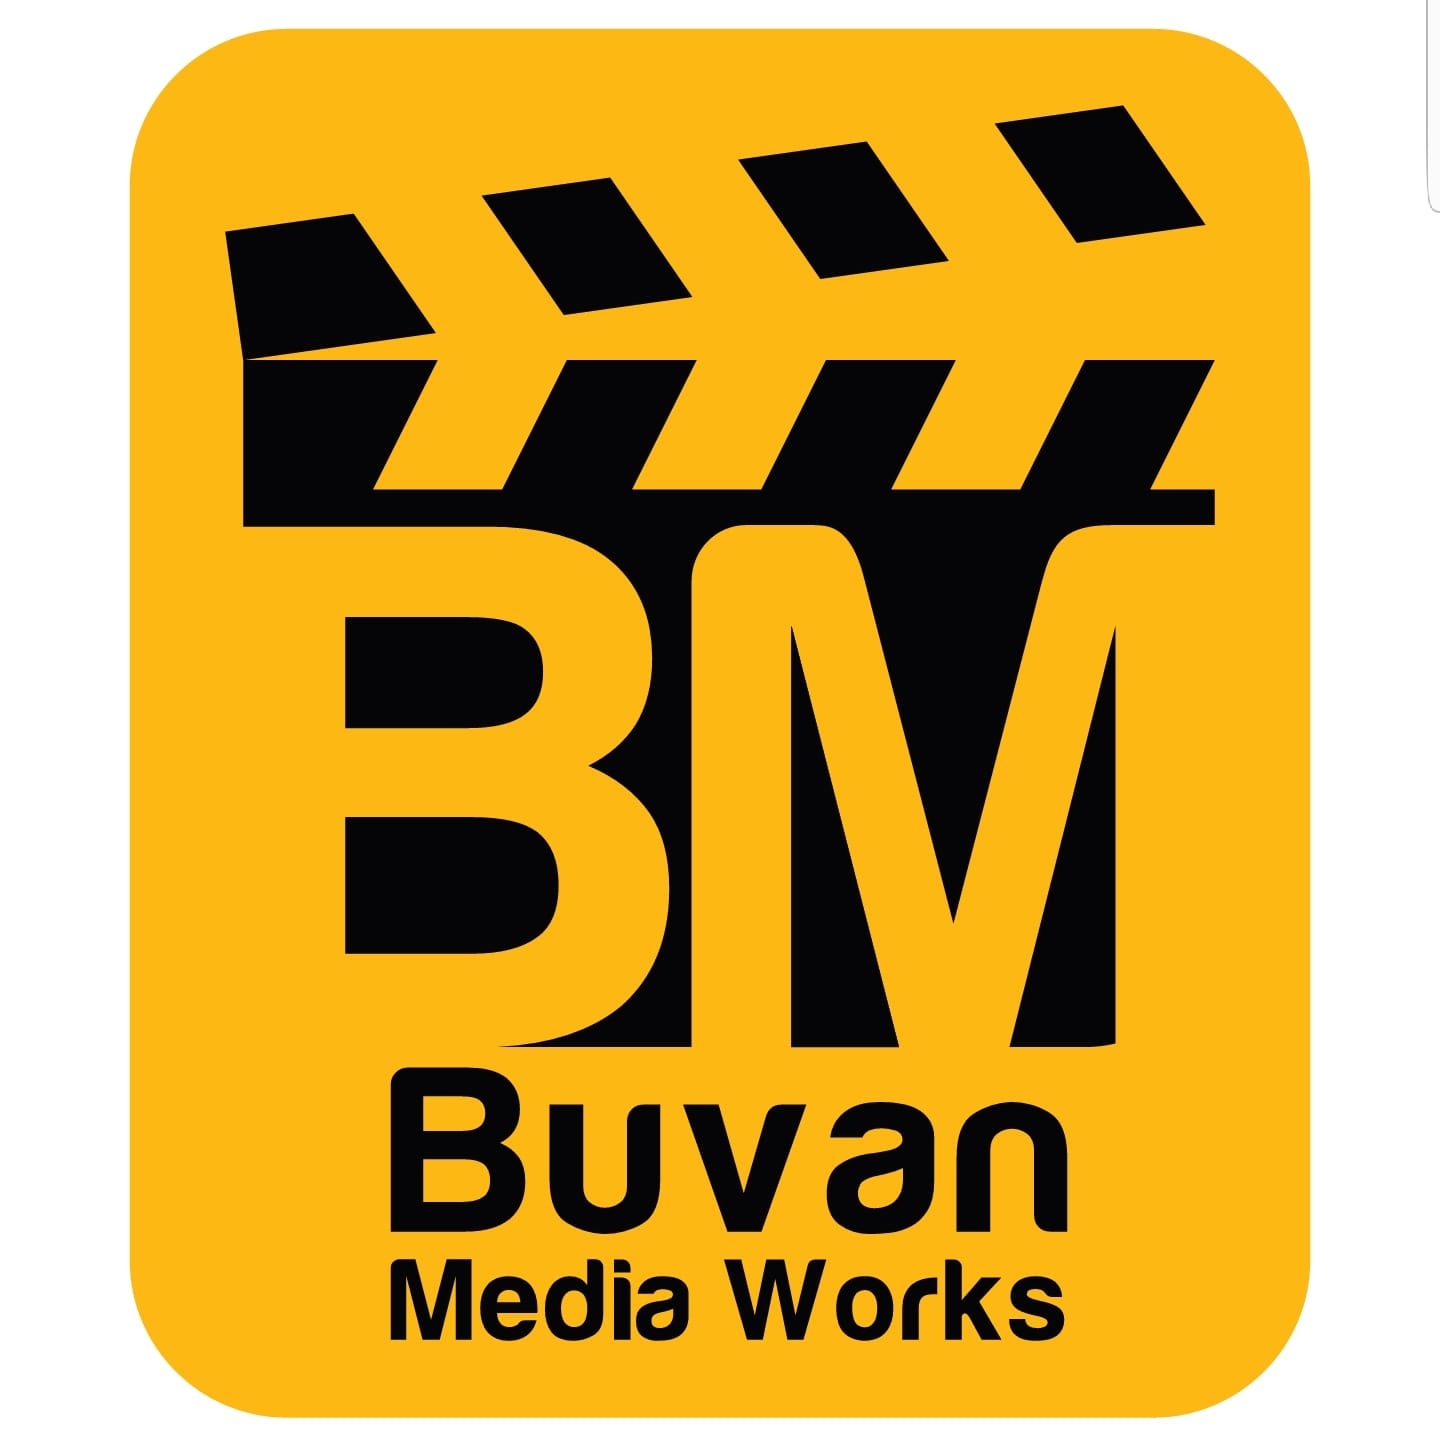 Buvan Media Works